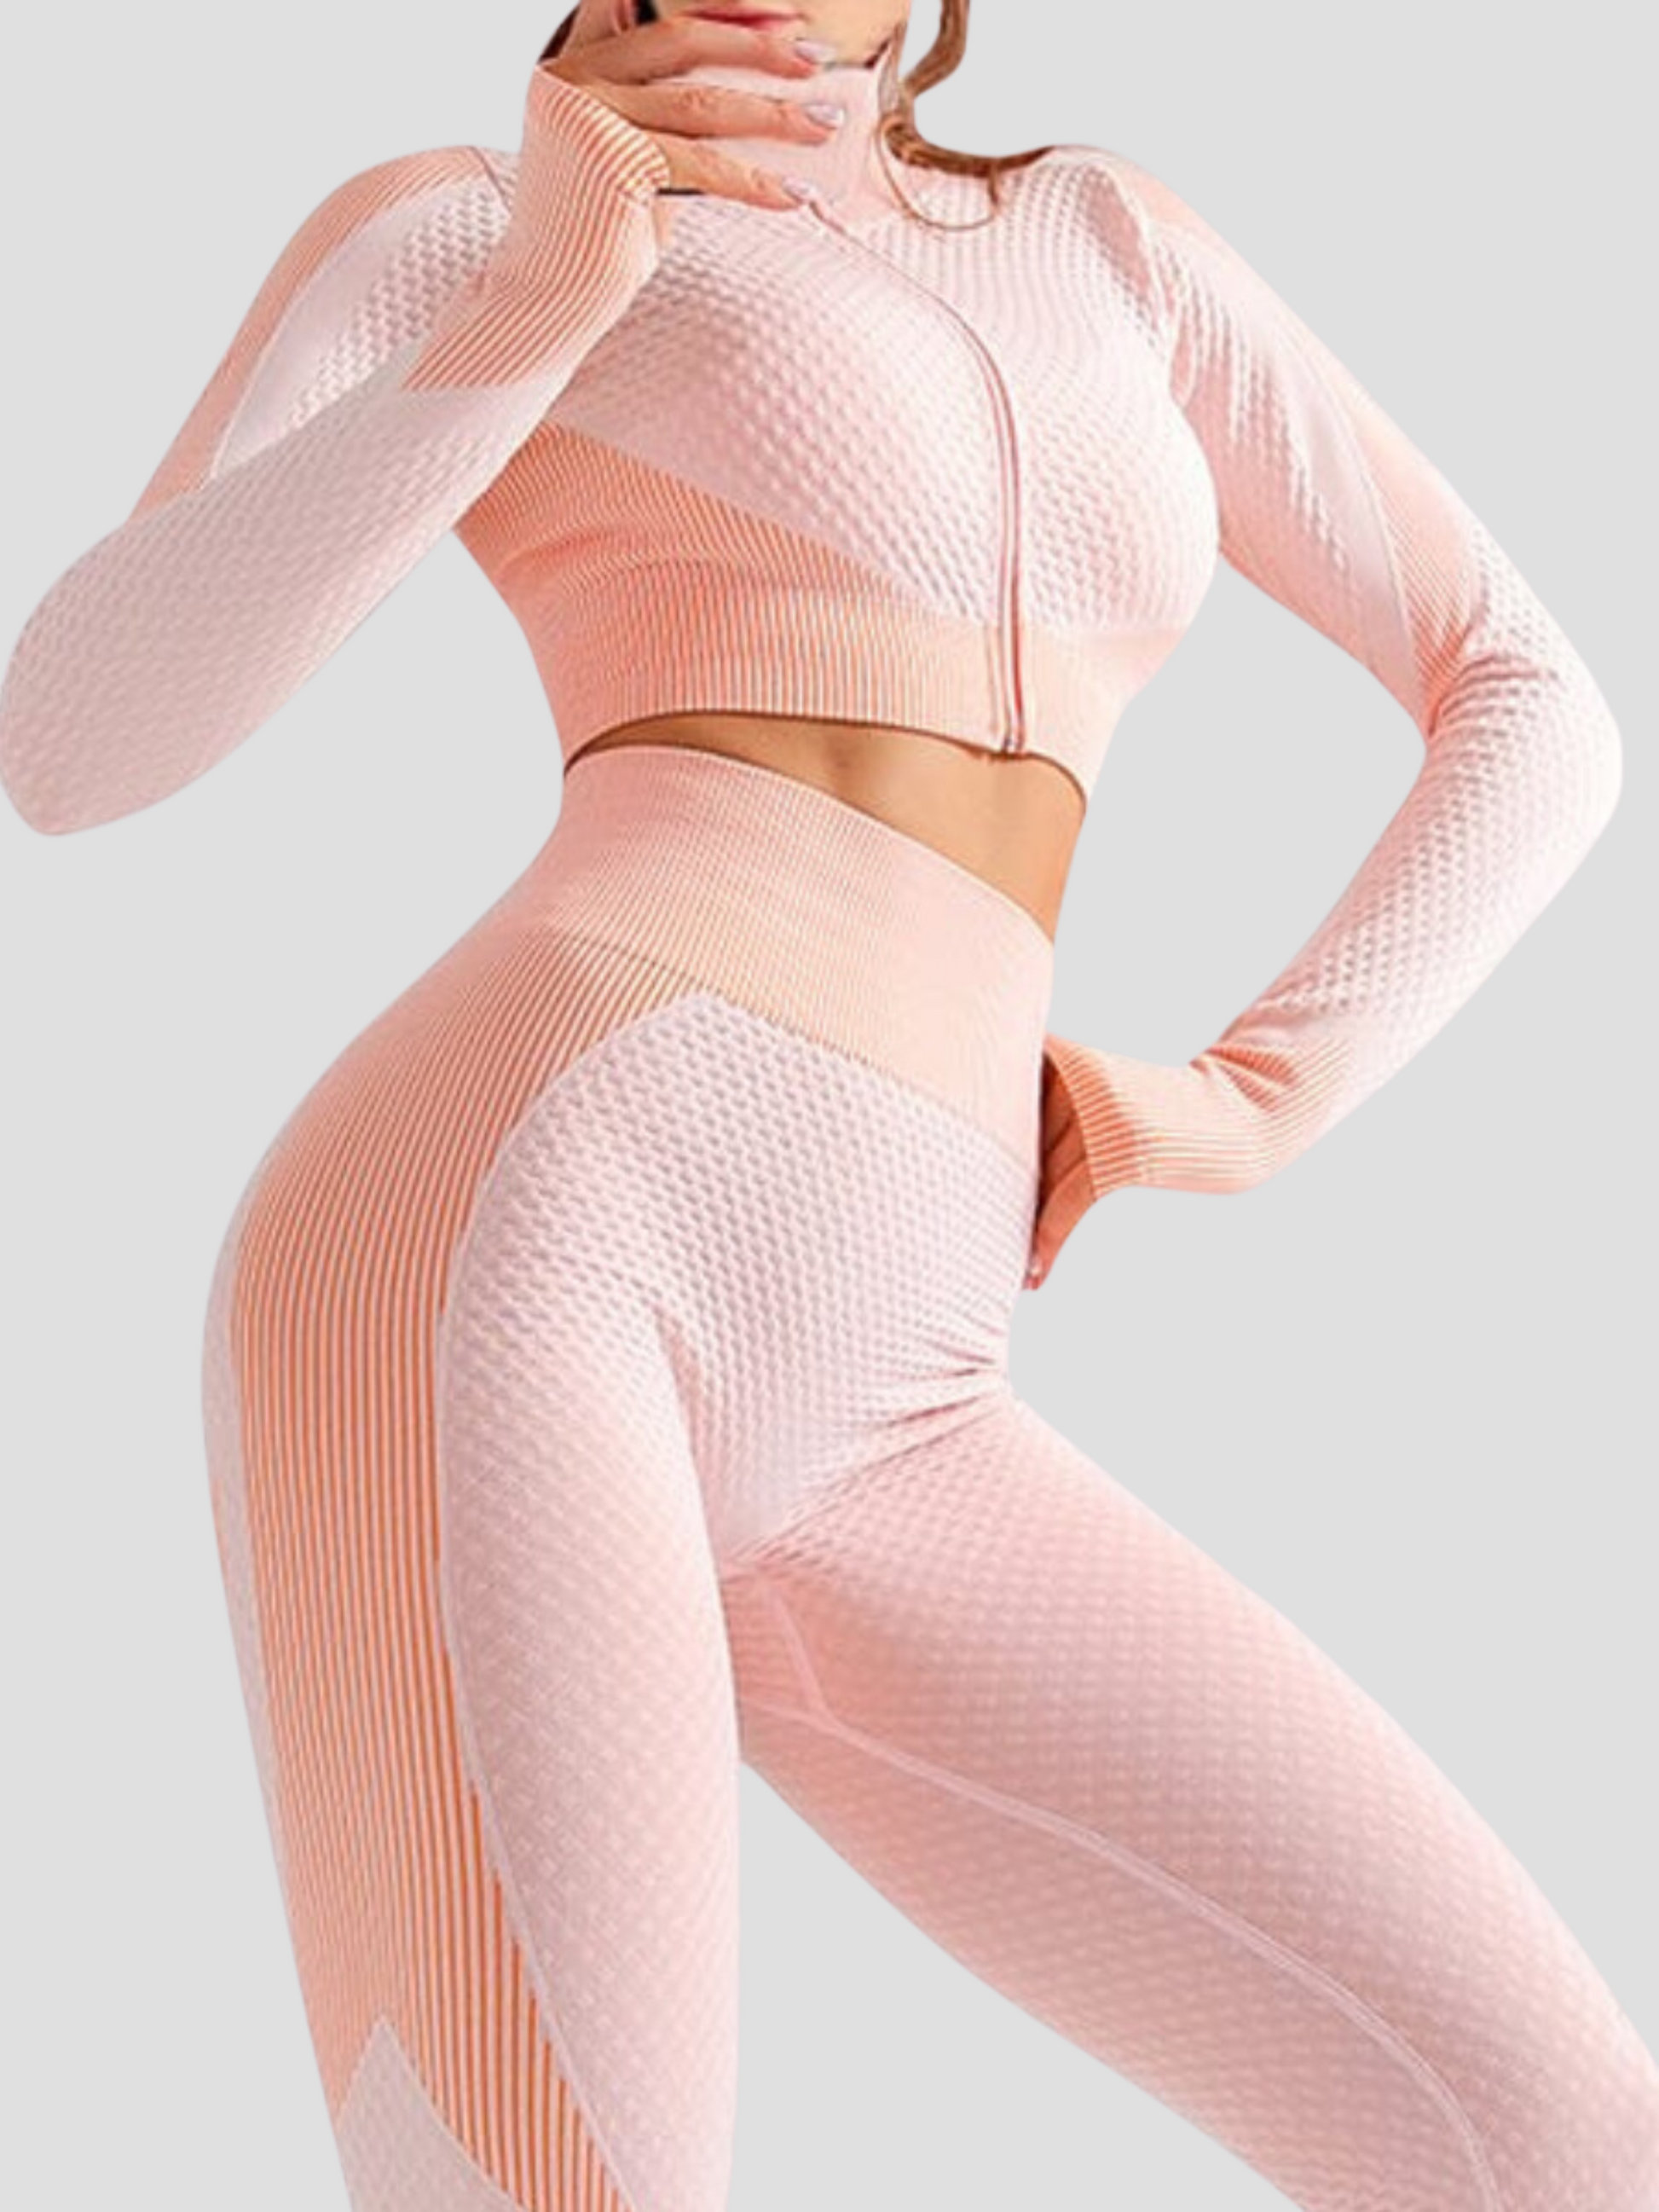 BodyFlexx Pink High-Waisted Activewear Set Leggings